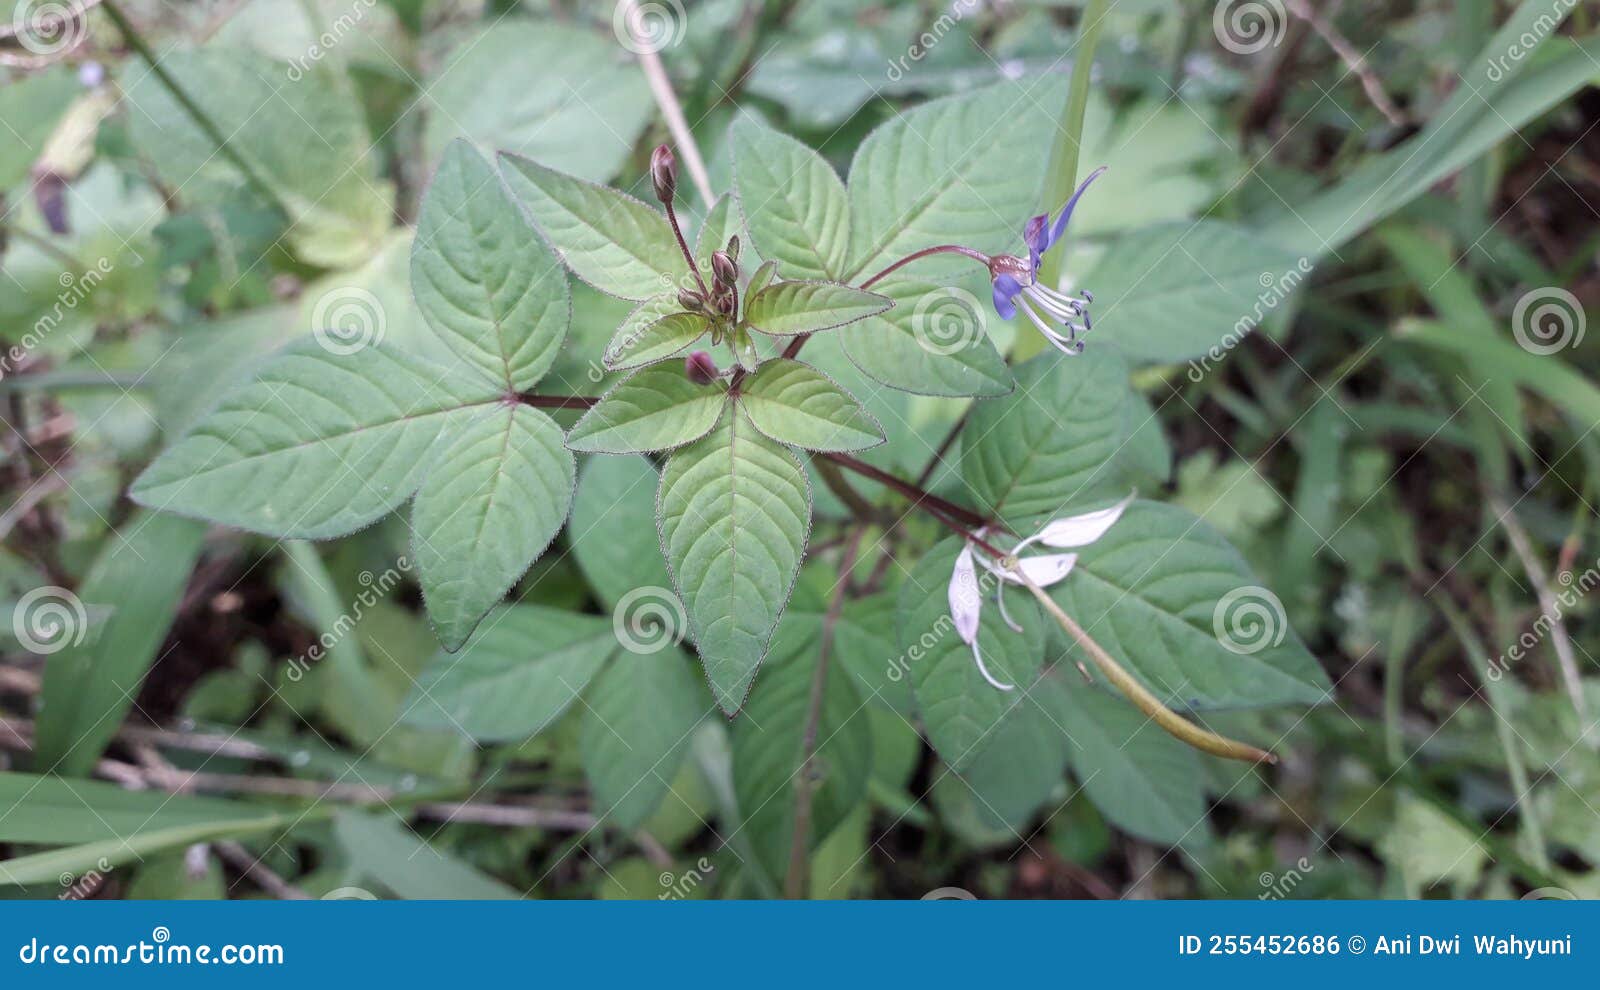 green maman lanang or cleome rutidosperma leaves